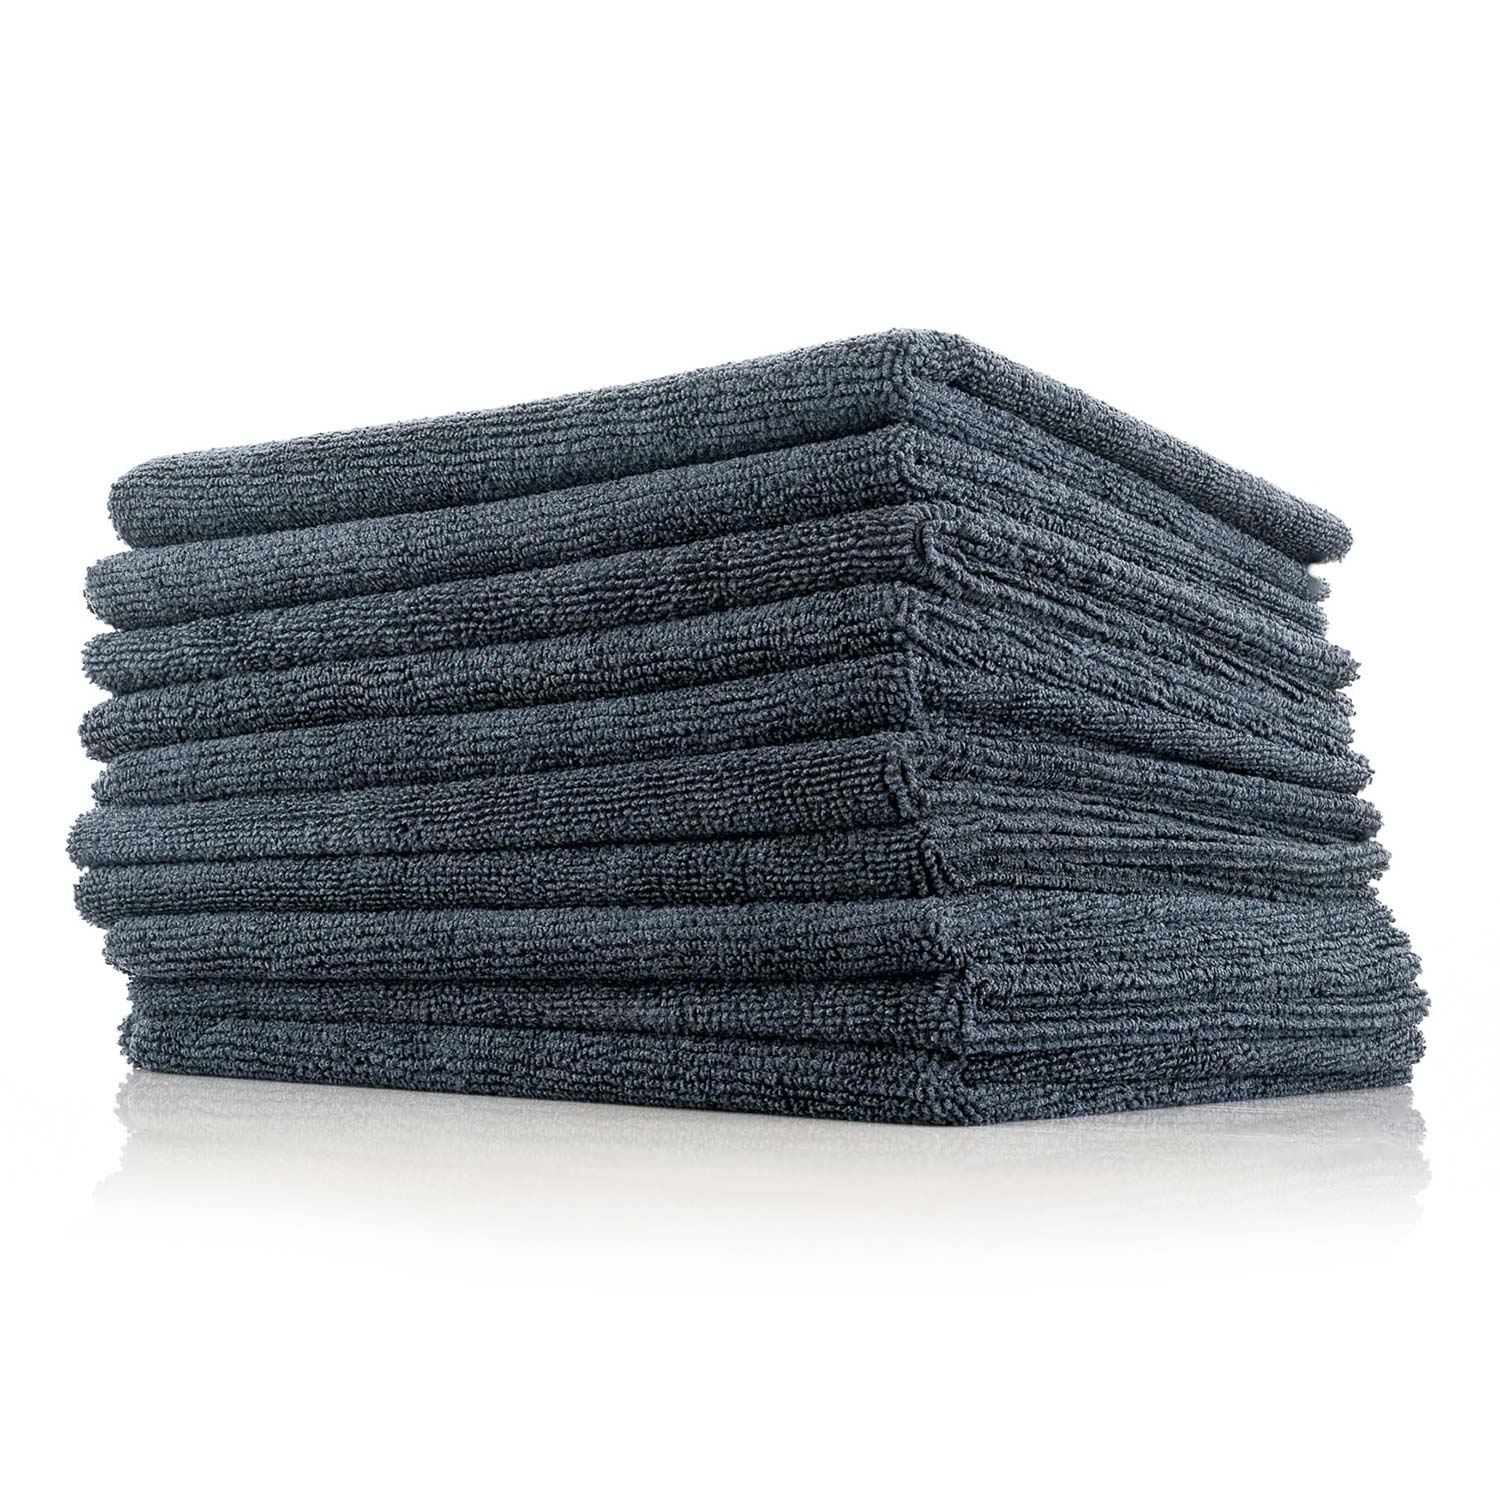 edgeless-microfiber-towels-300-gsm-black-10-pack